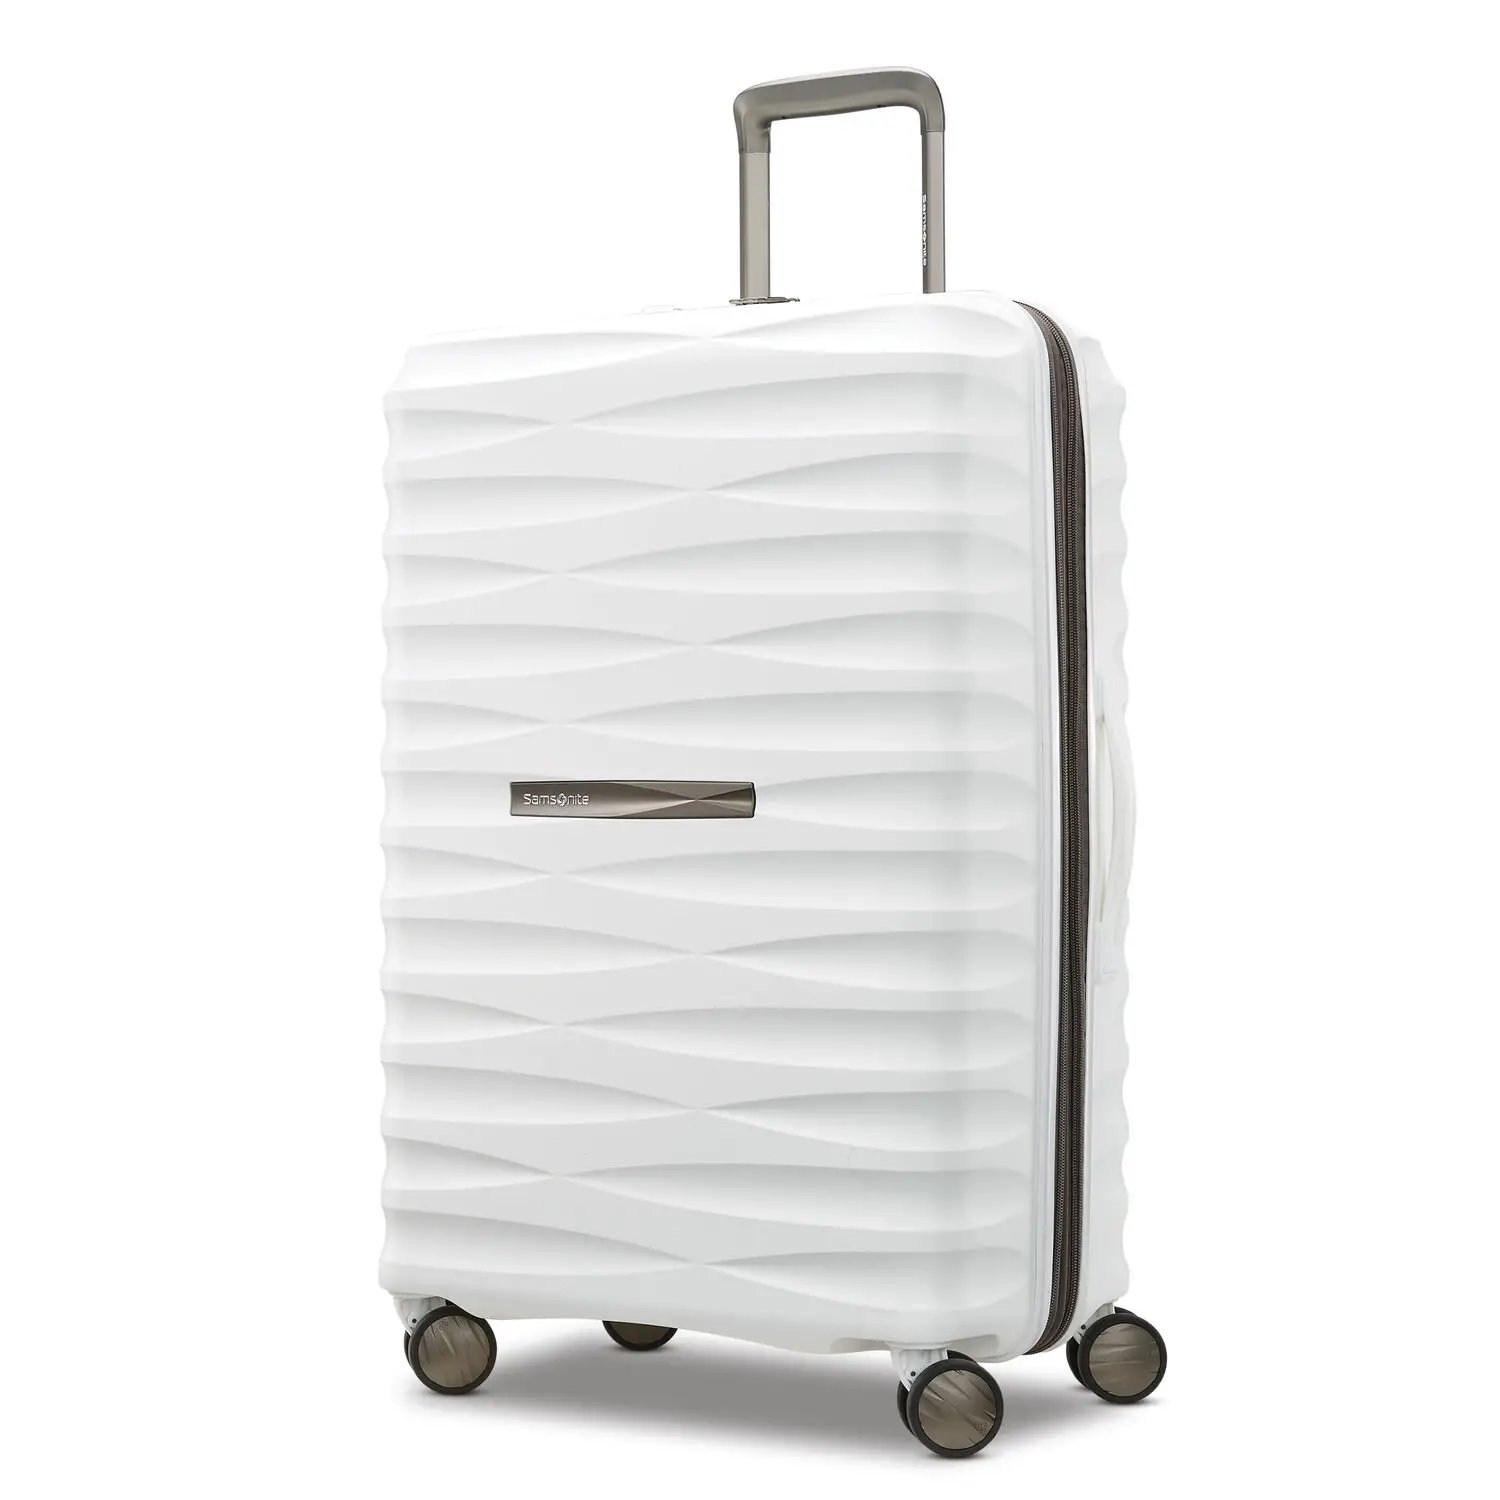 Best Travel Luggage Check In Checked Lightweight Suitcase Stylish Samsonite Voltage DLX 2522 Spinner